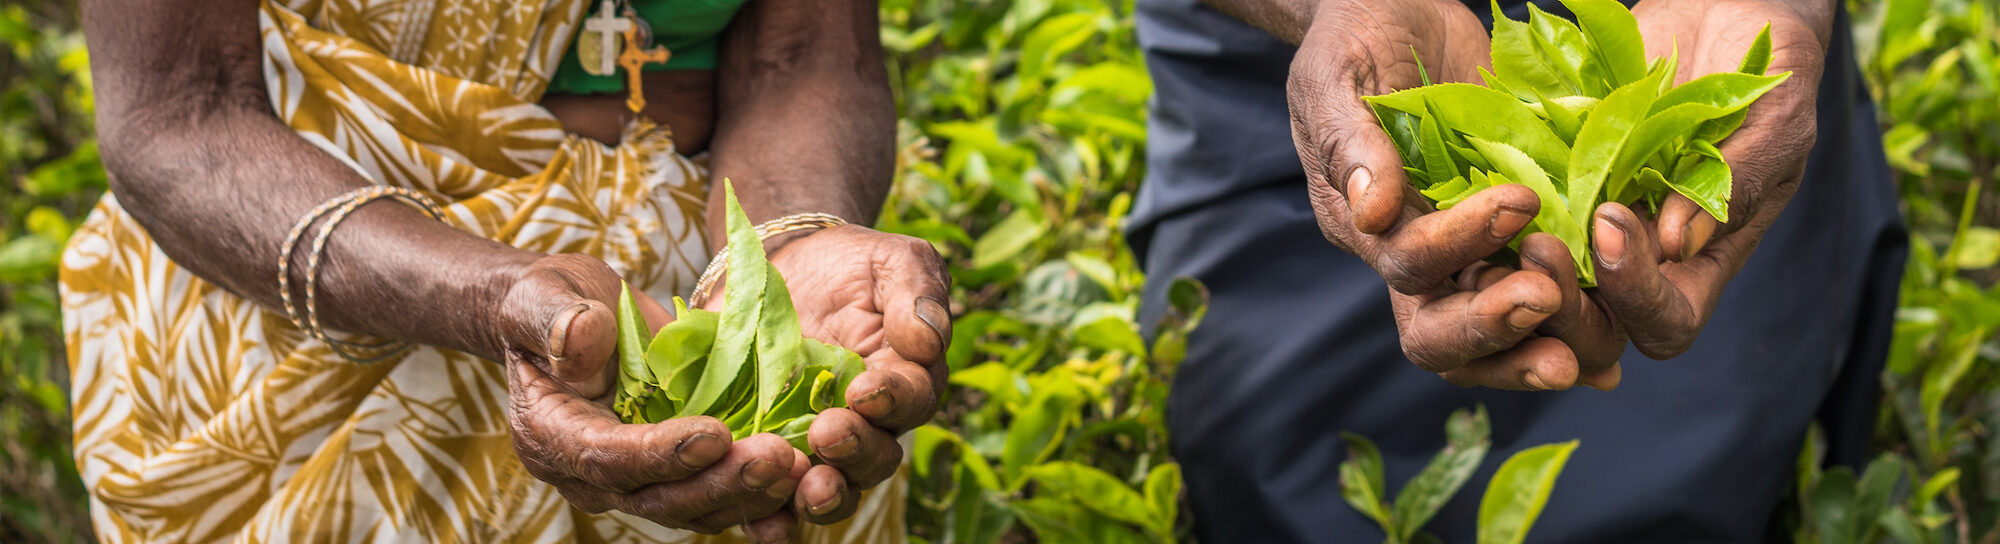 Sri Lanka: Pestizidverbot mit fatalen Folgen